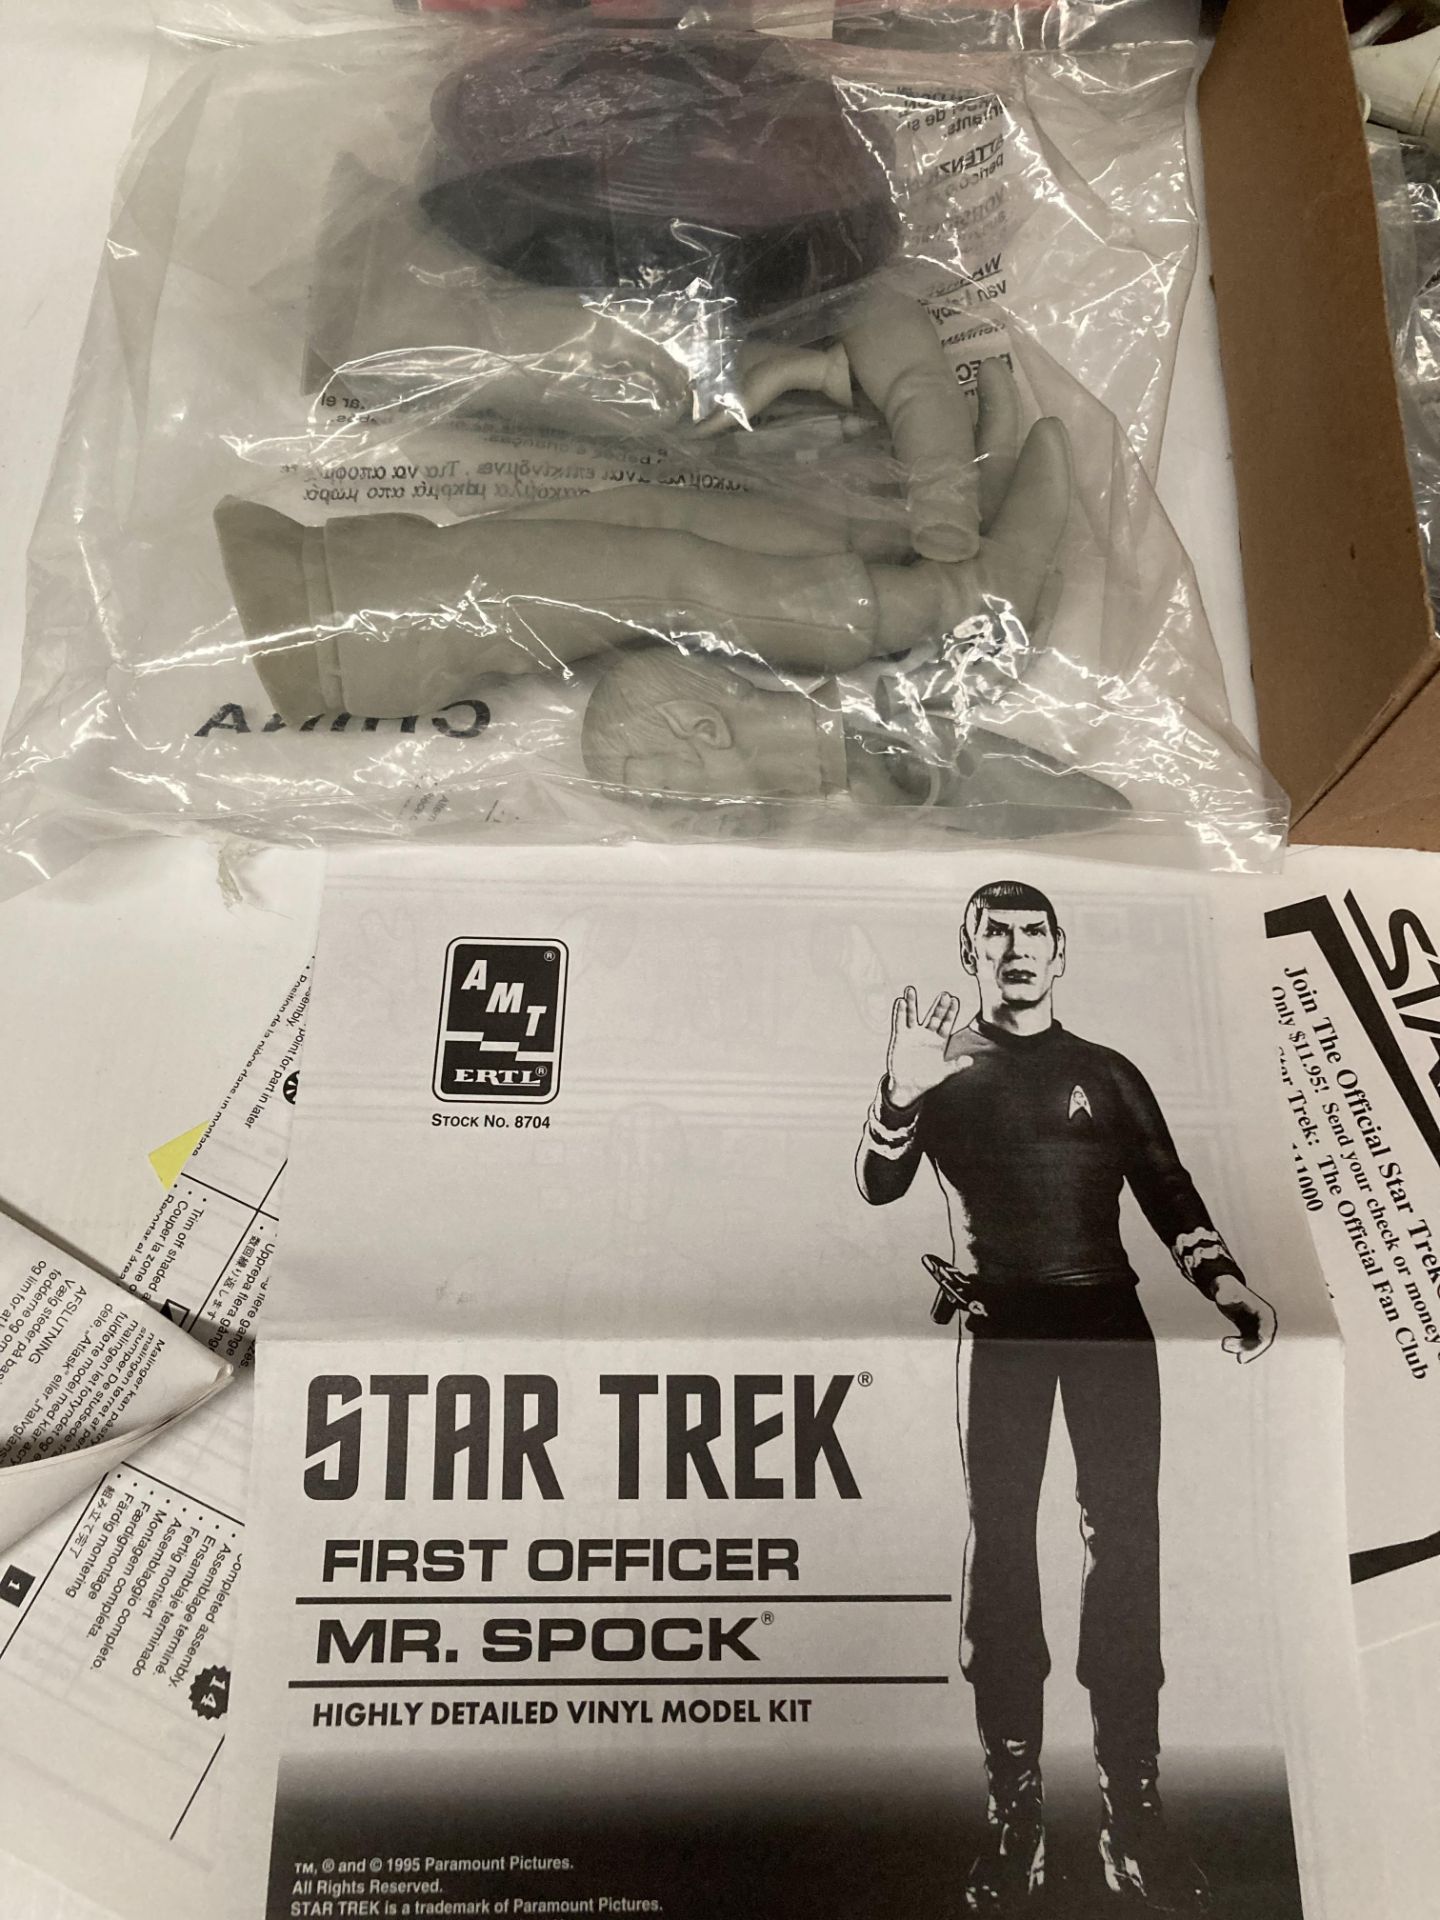 STAR TREK First Officer "Mr Spock" highly detailed vinyl model kit - Special Collectors Edition - Image 3 of 3